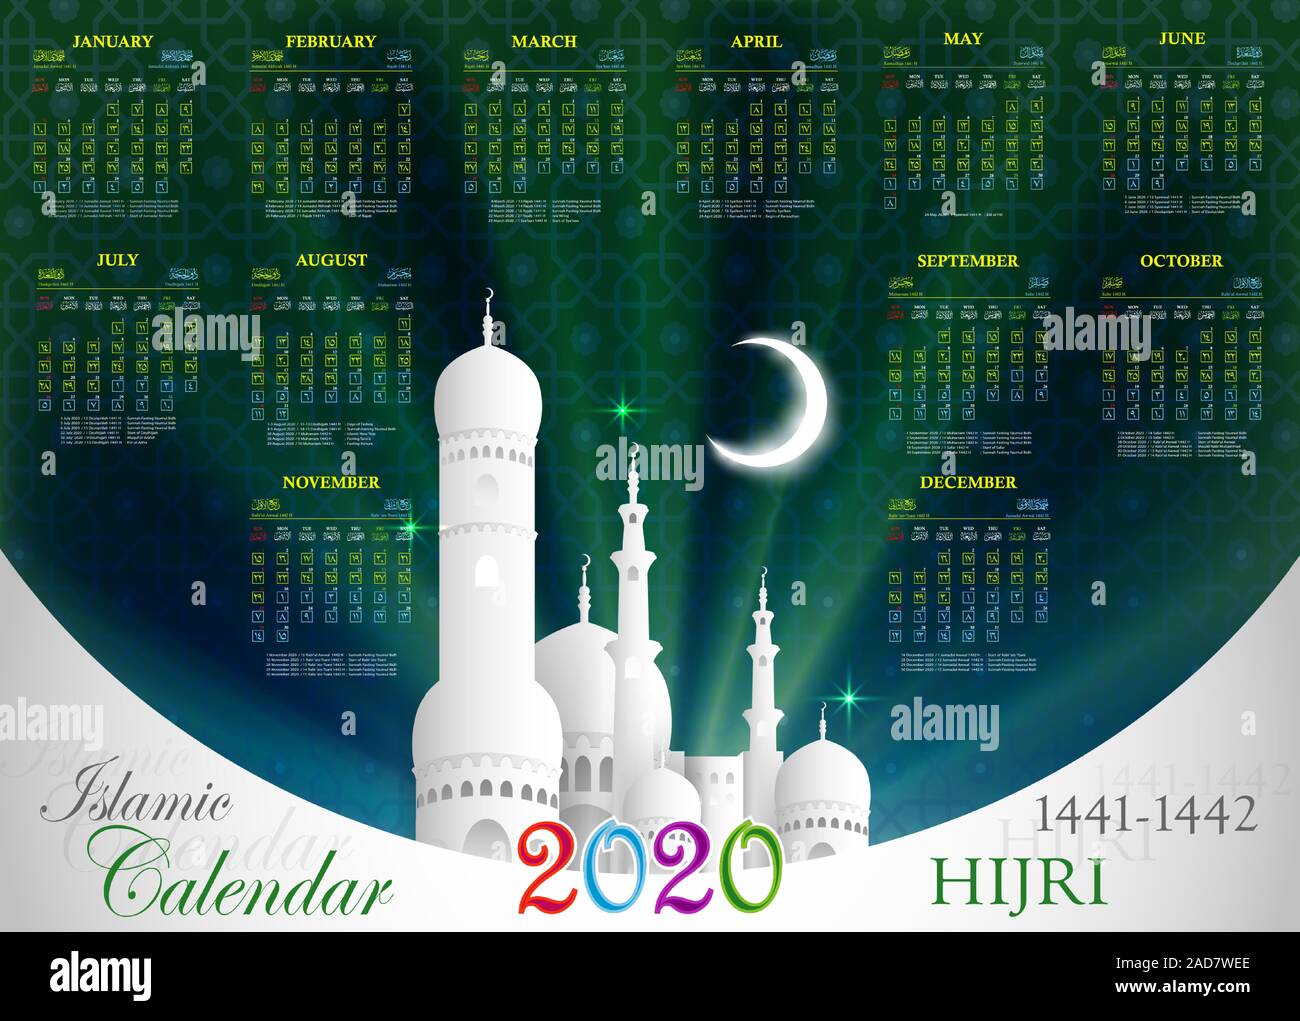 Однкнр исламский календарь. Мусульманский календарь. Месяцы мусульманского календаря. Календарь мусульман. Мусульманский календарь рисунок.